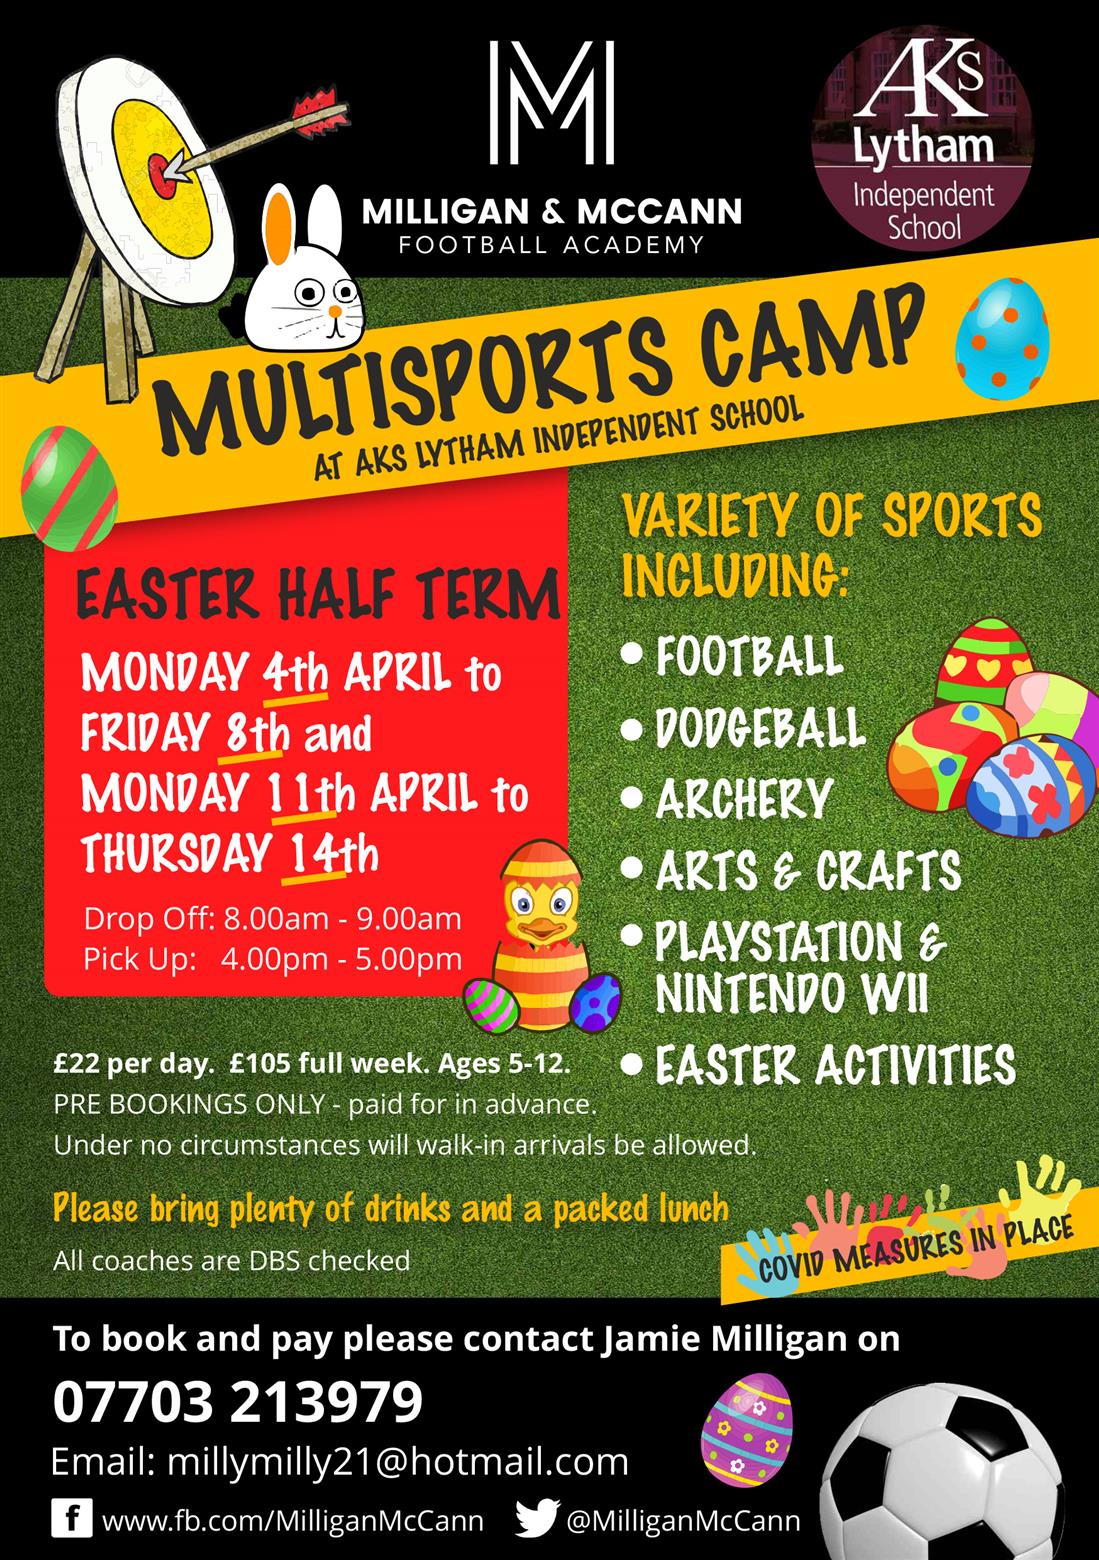 Milligan & McCann Easter Multisports Camp